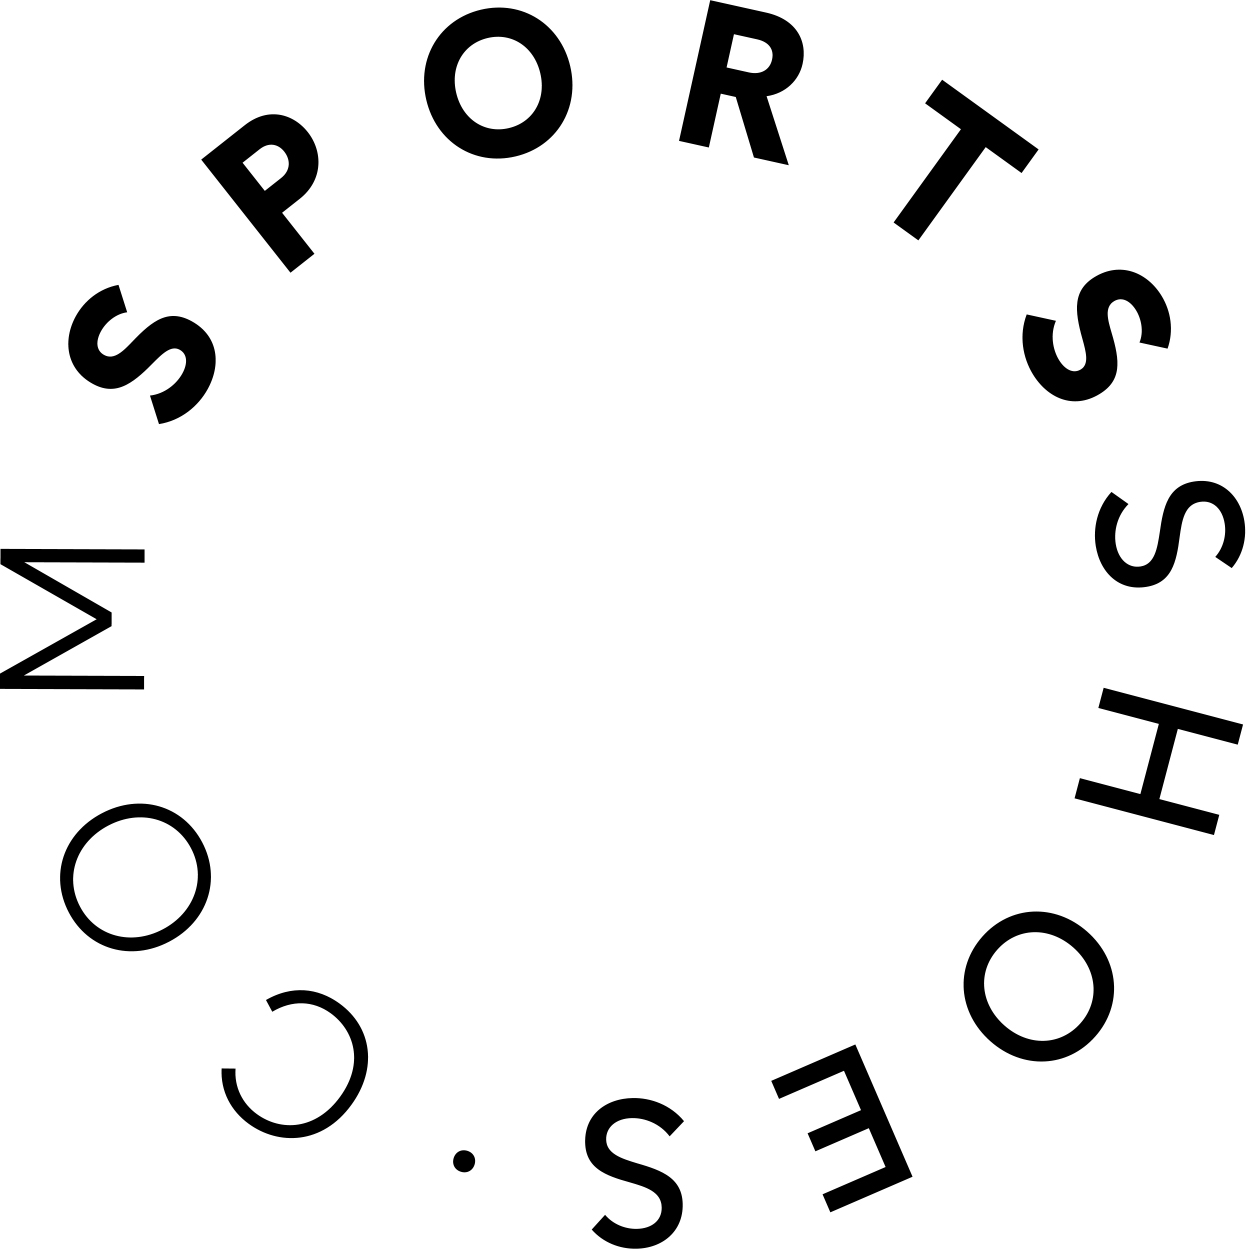 Code promo Sportsshoes